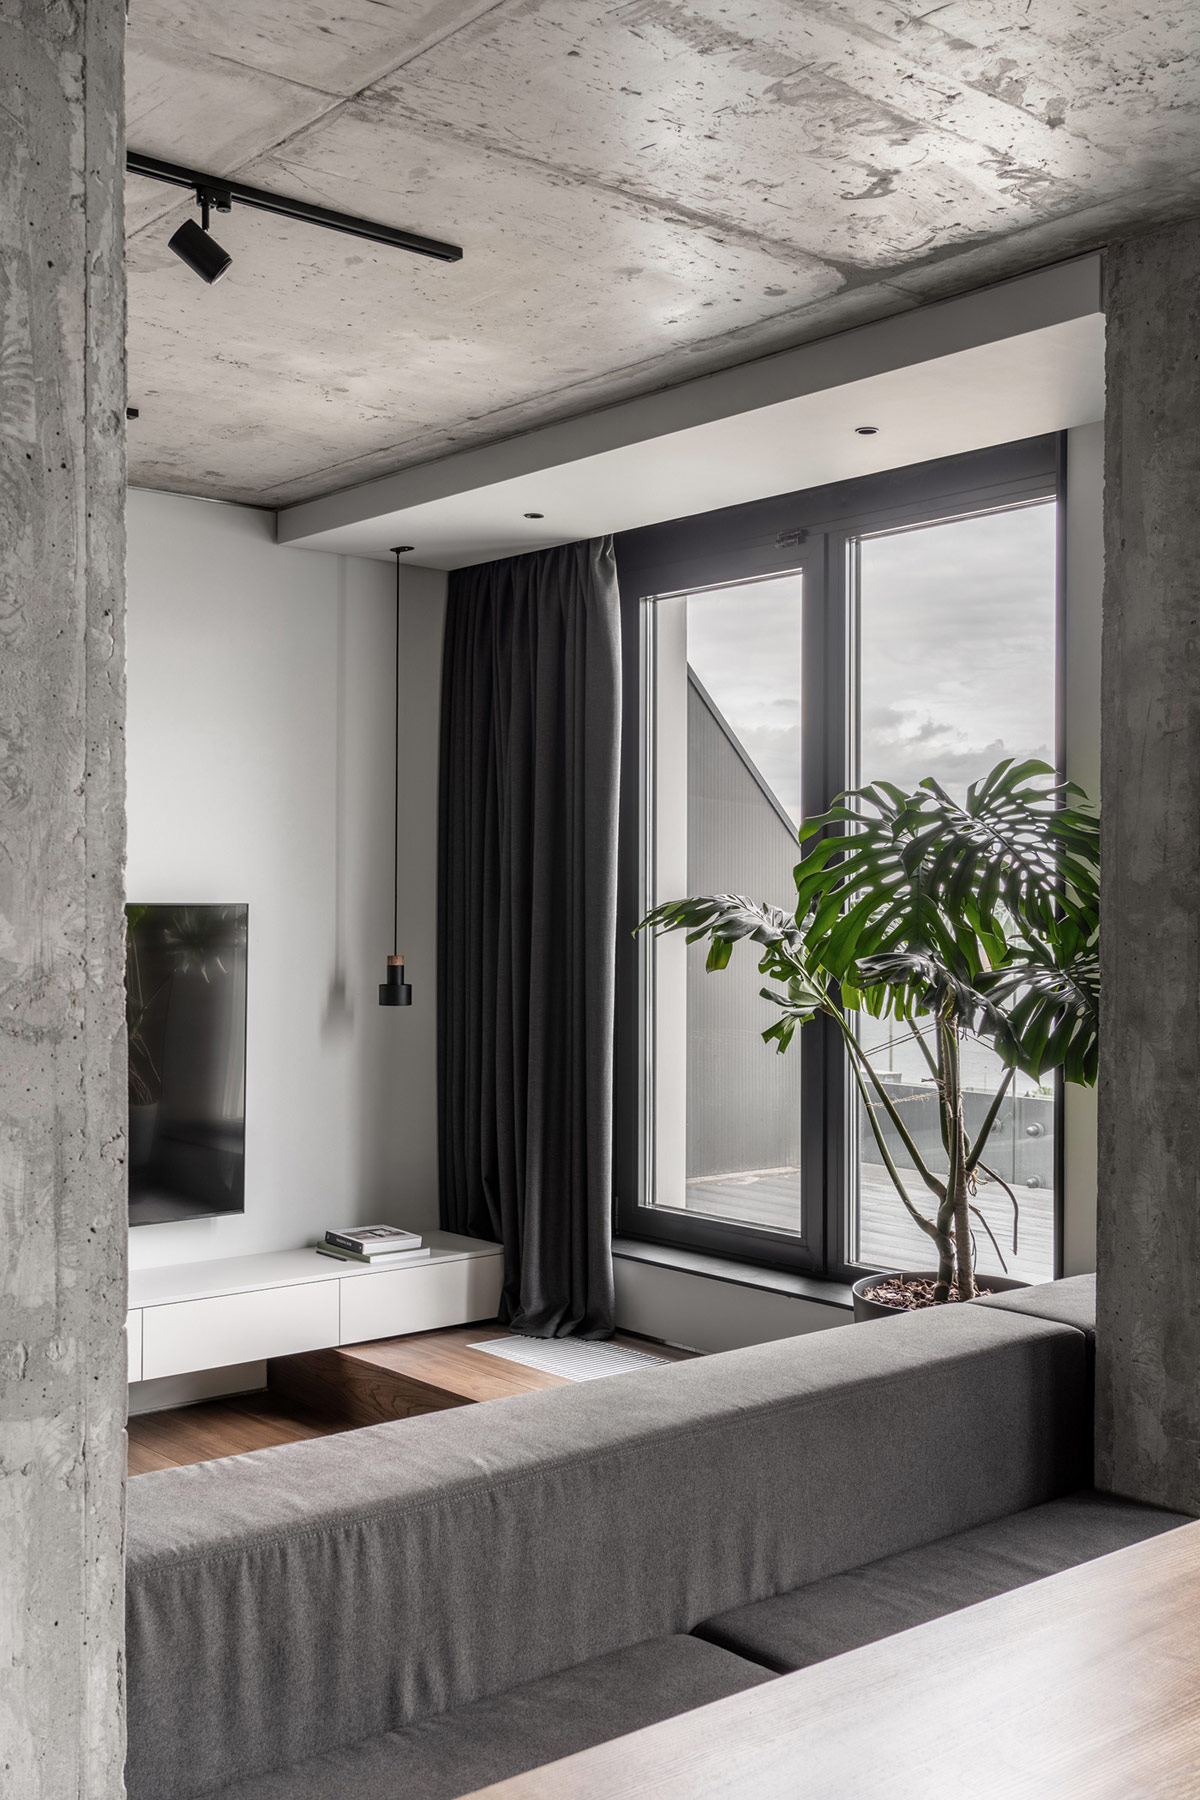 Concrete Monochrome Interiors That Incorporate Glass Wall Rooms